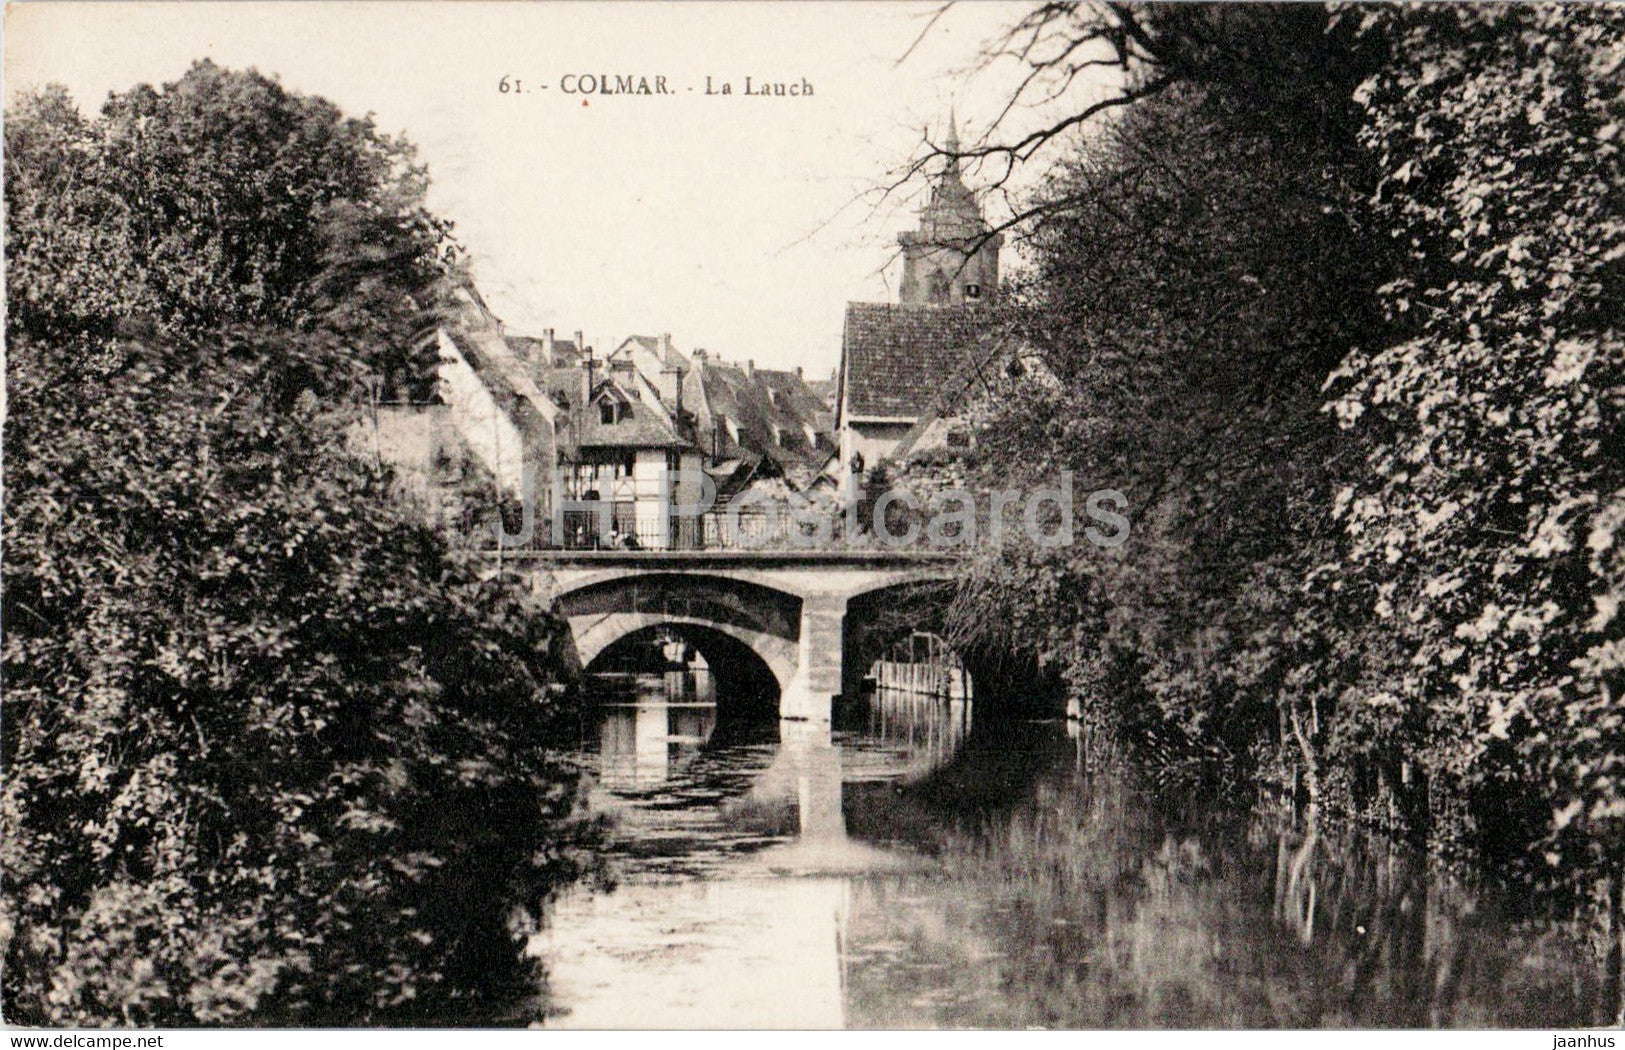 Colmar - La Lauch - 61 - old postcard - France - unused - JH Postcards